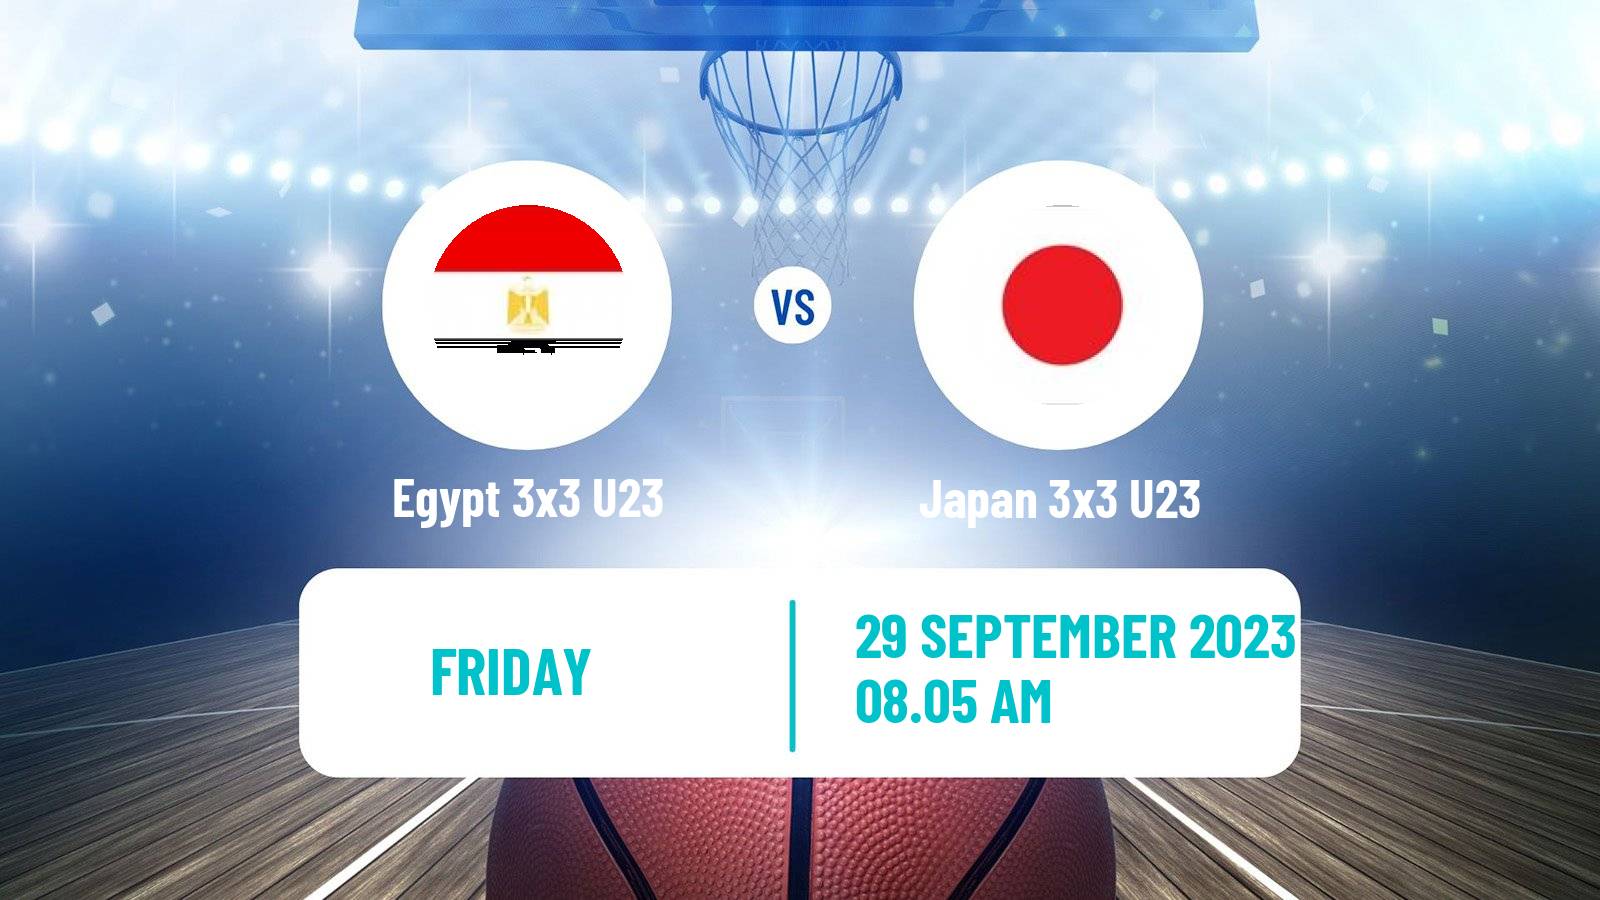 Basketball World Cup Basketball 3x3 U23 Egypt 3x3 U23 - Japan 3x3 U23